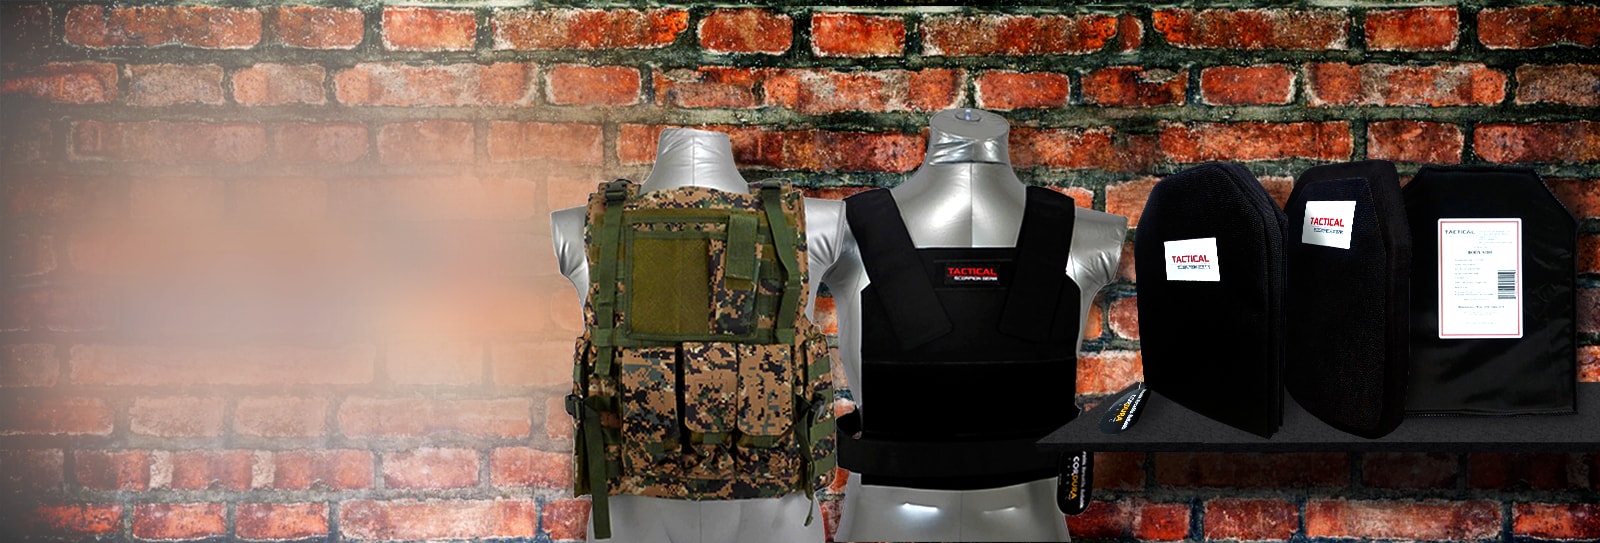 Tactical Scorpion Gear Level IV PE Alumina Polyethylene Curved Body Armor 6x6 - Level IV